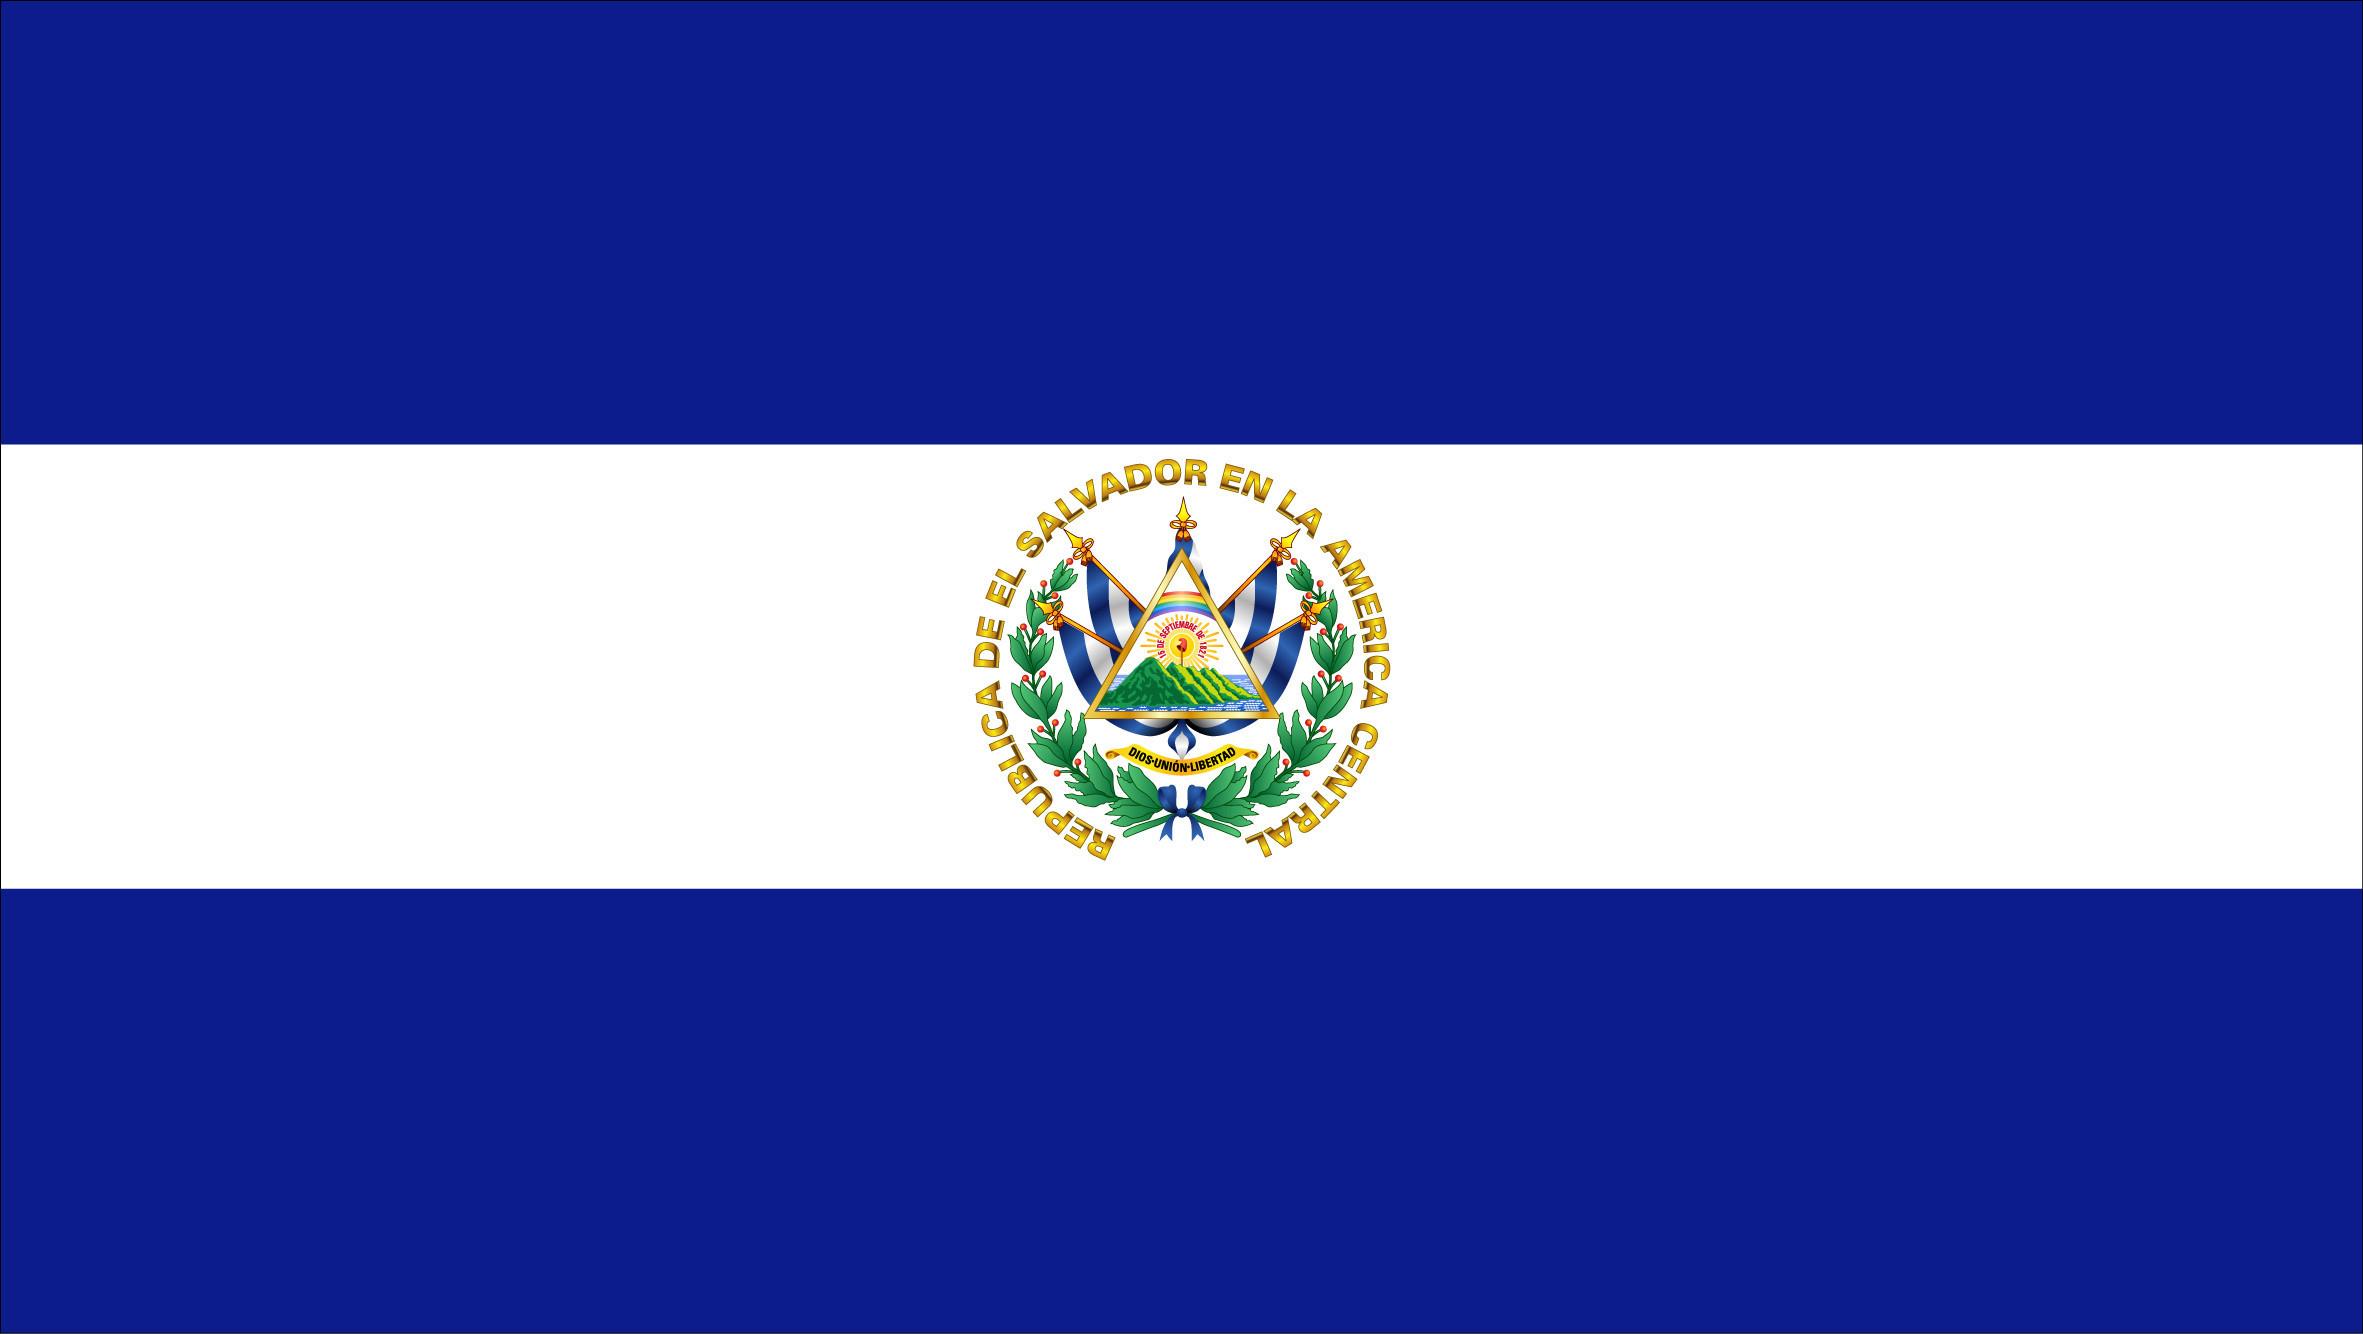 Bandera De El Salvador Wallpaper background picture